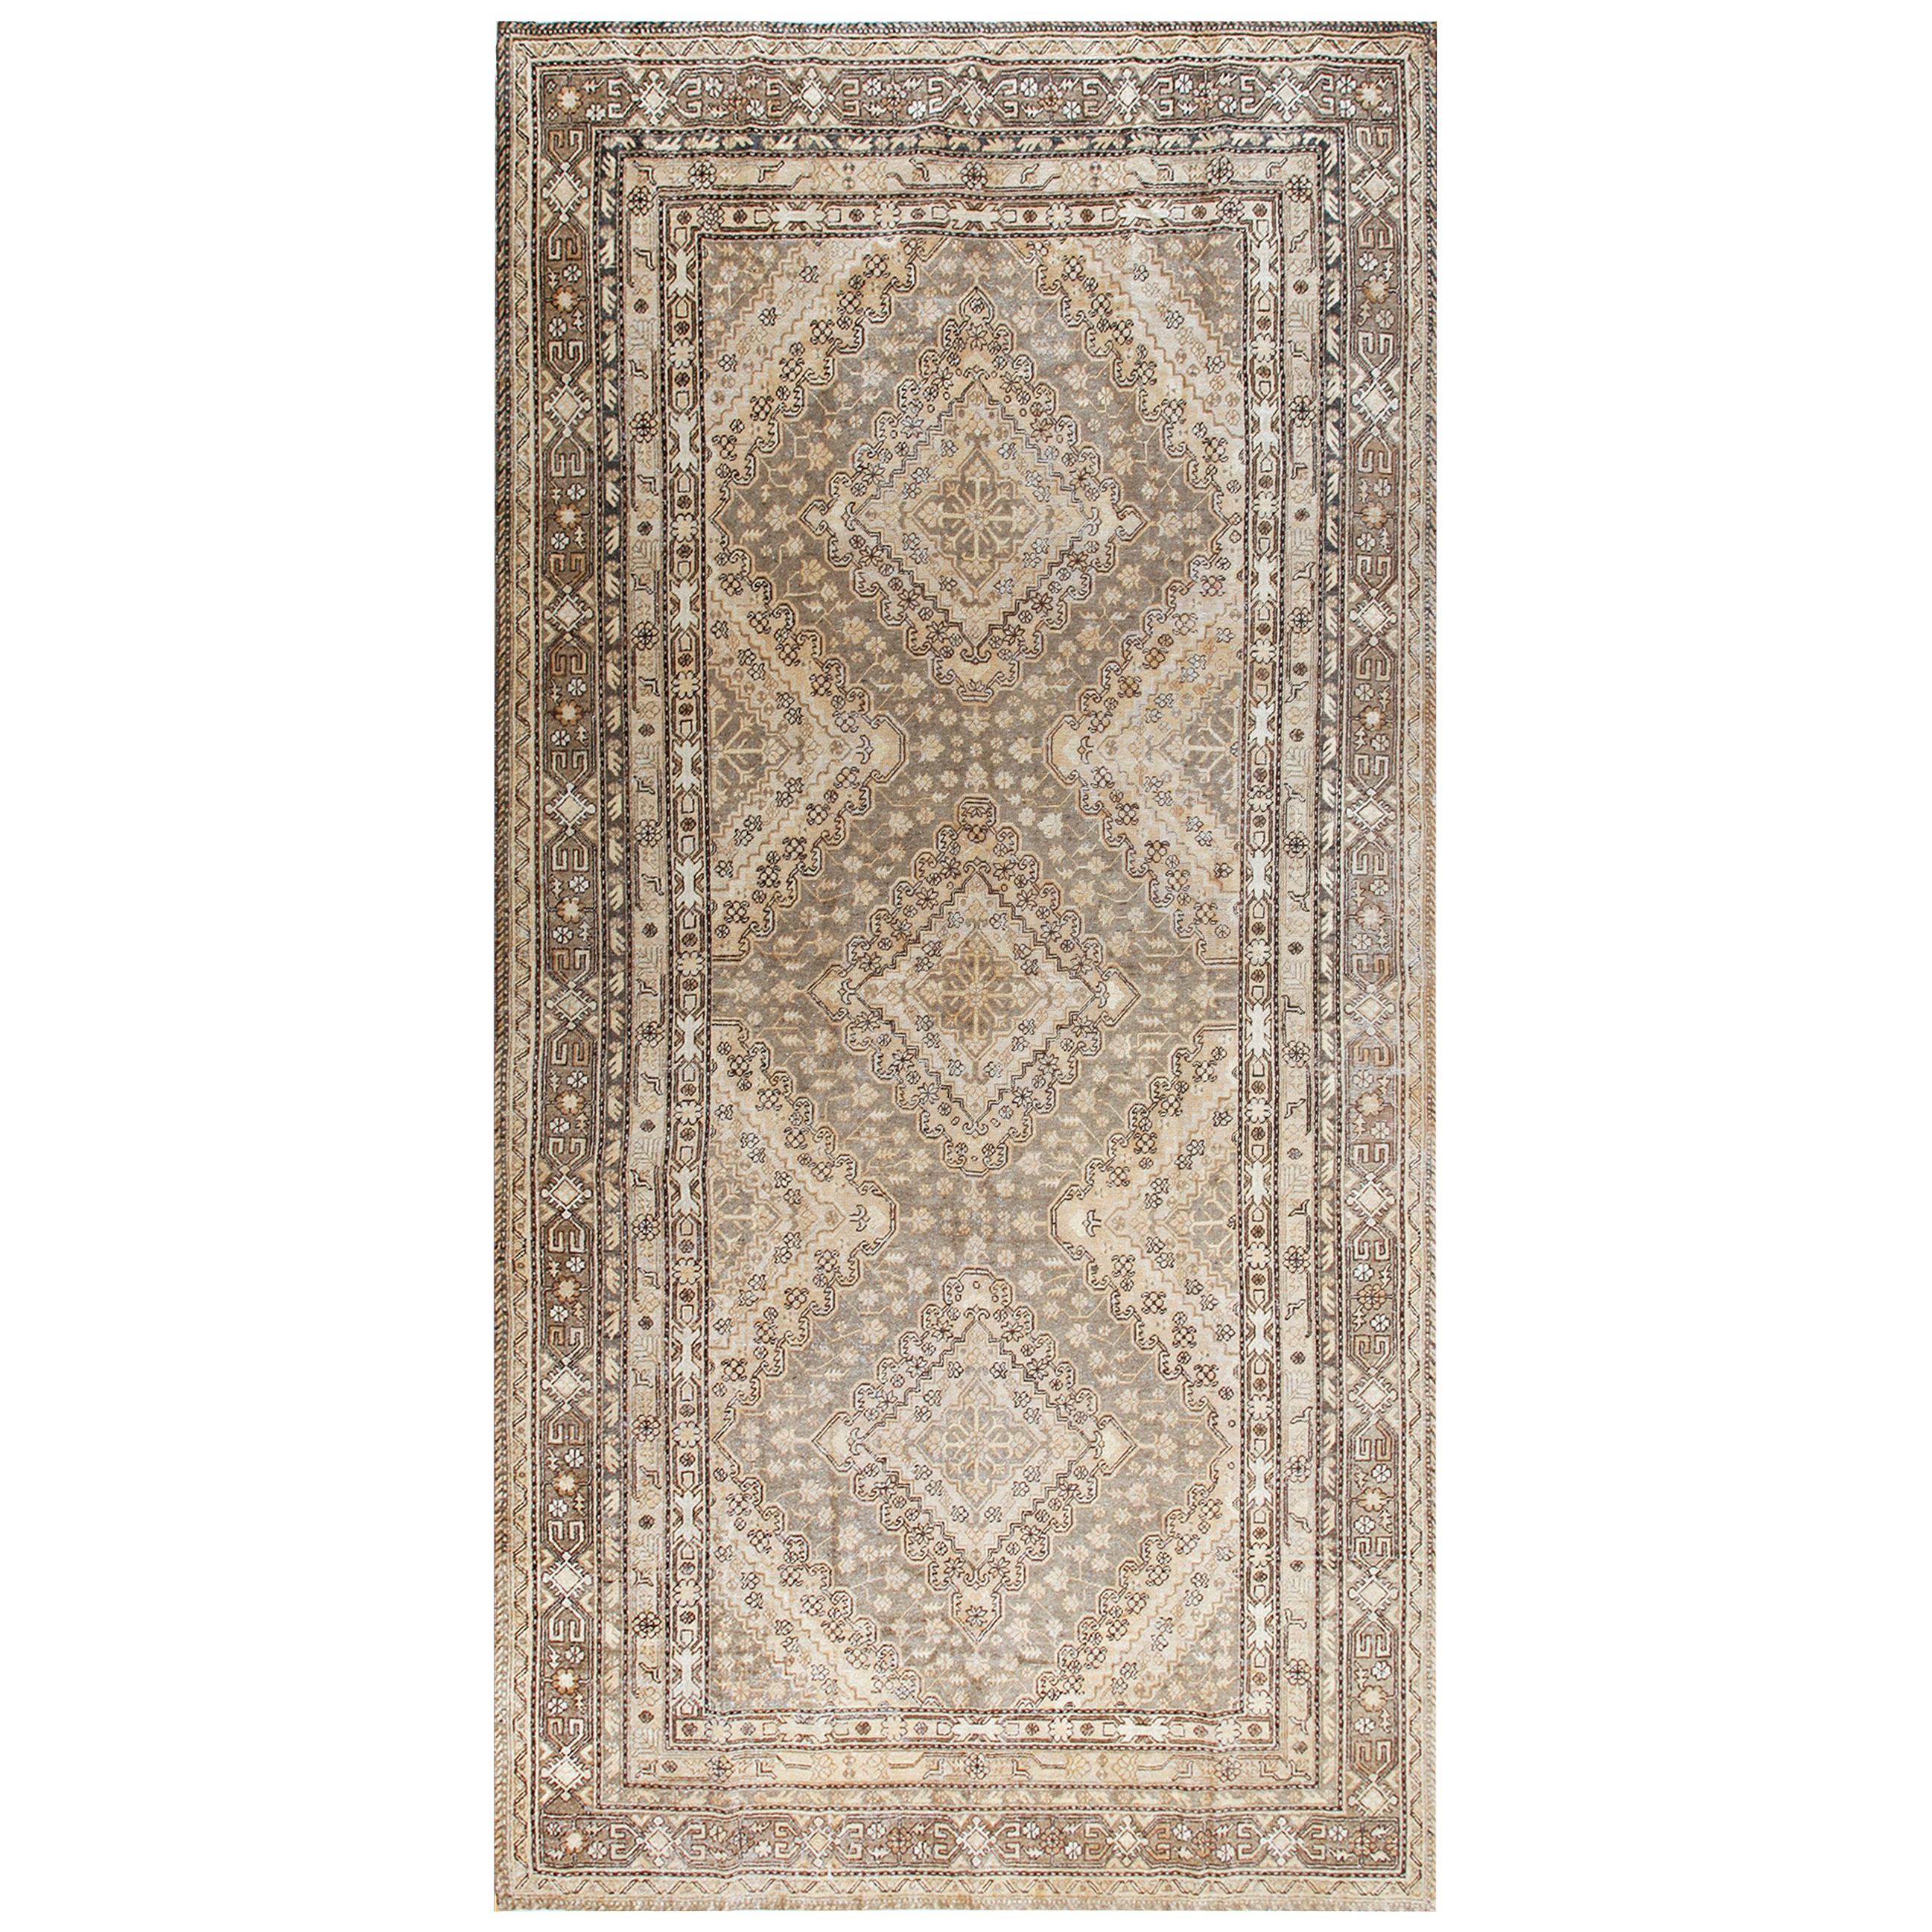 Early 20th Century Central Asian Khotan Carpet ( 8'6" x 17'6" - 259 x 533 )